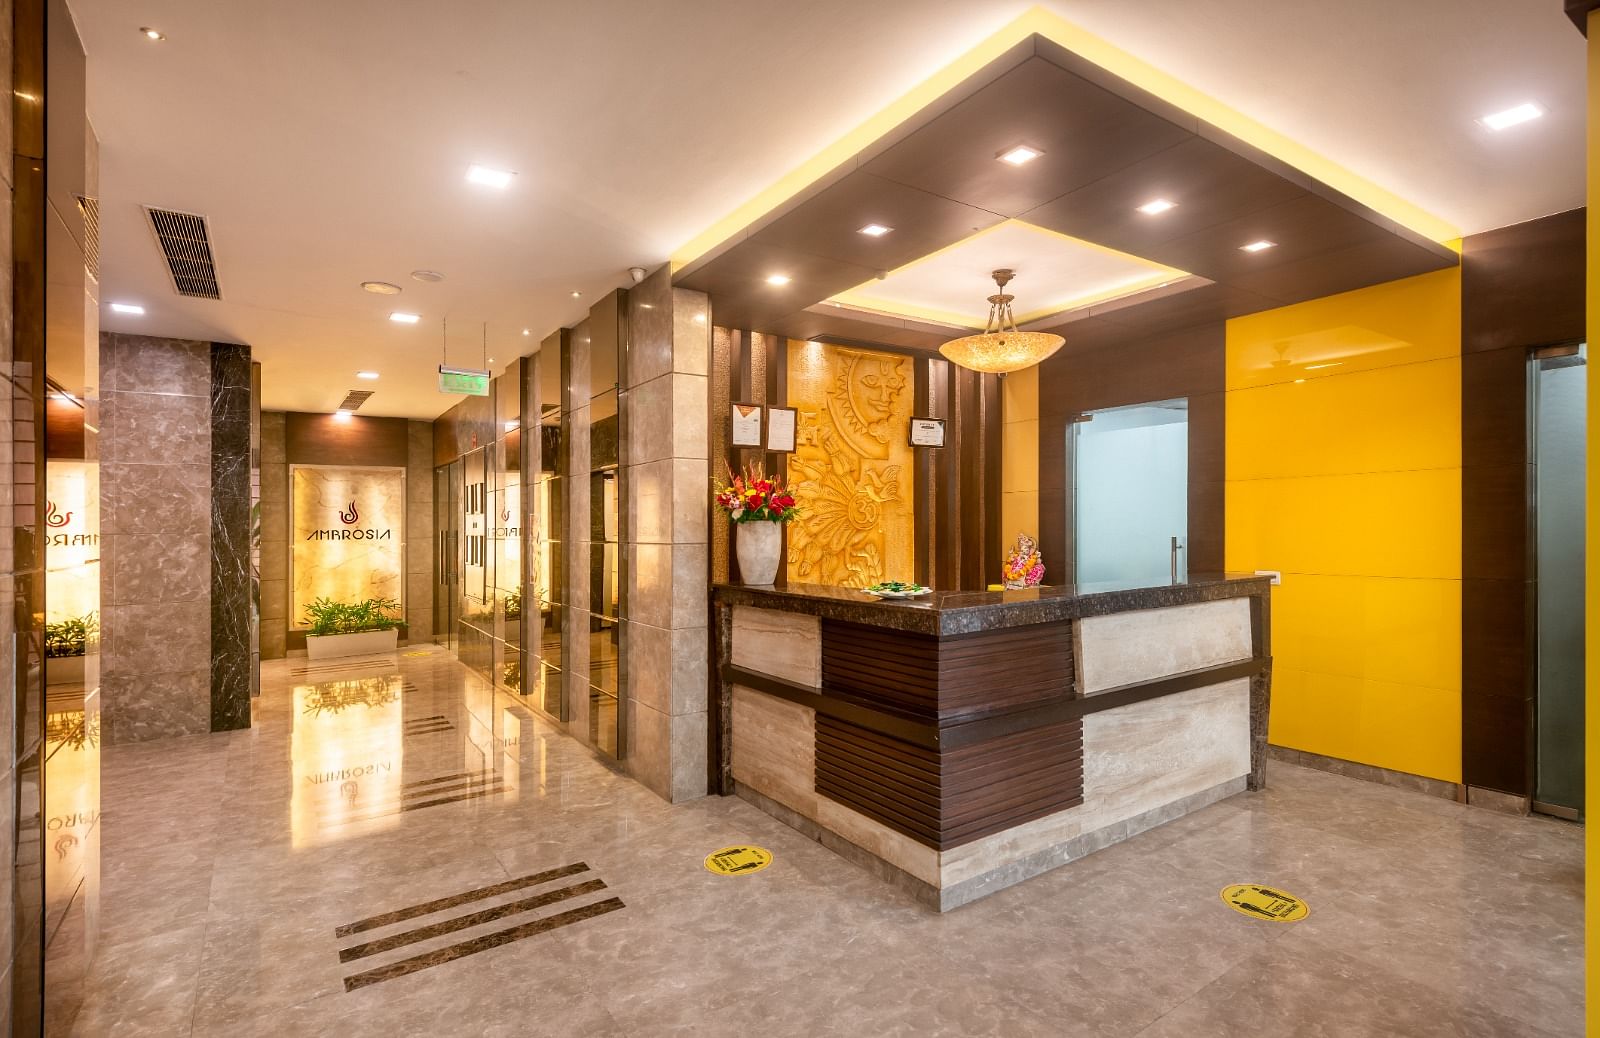 The Golden Palms Hotel Spa in Patparganj, Delhi